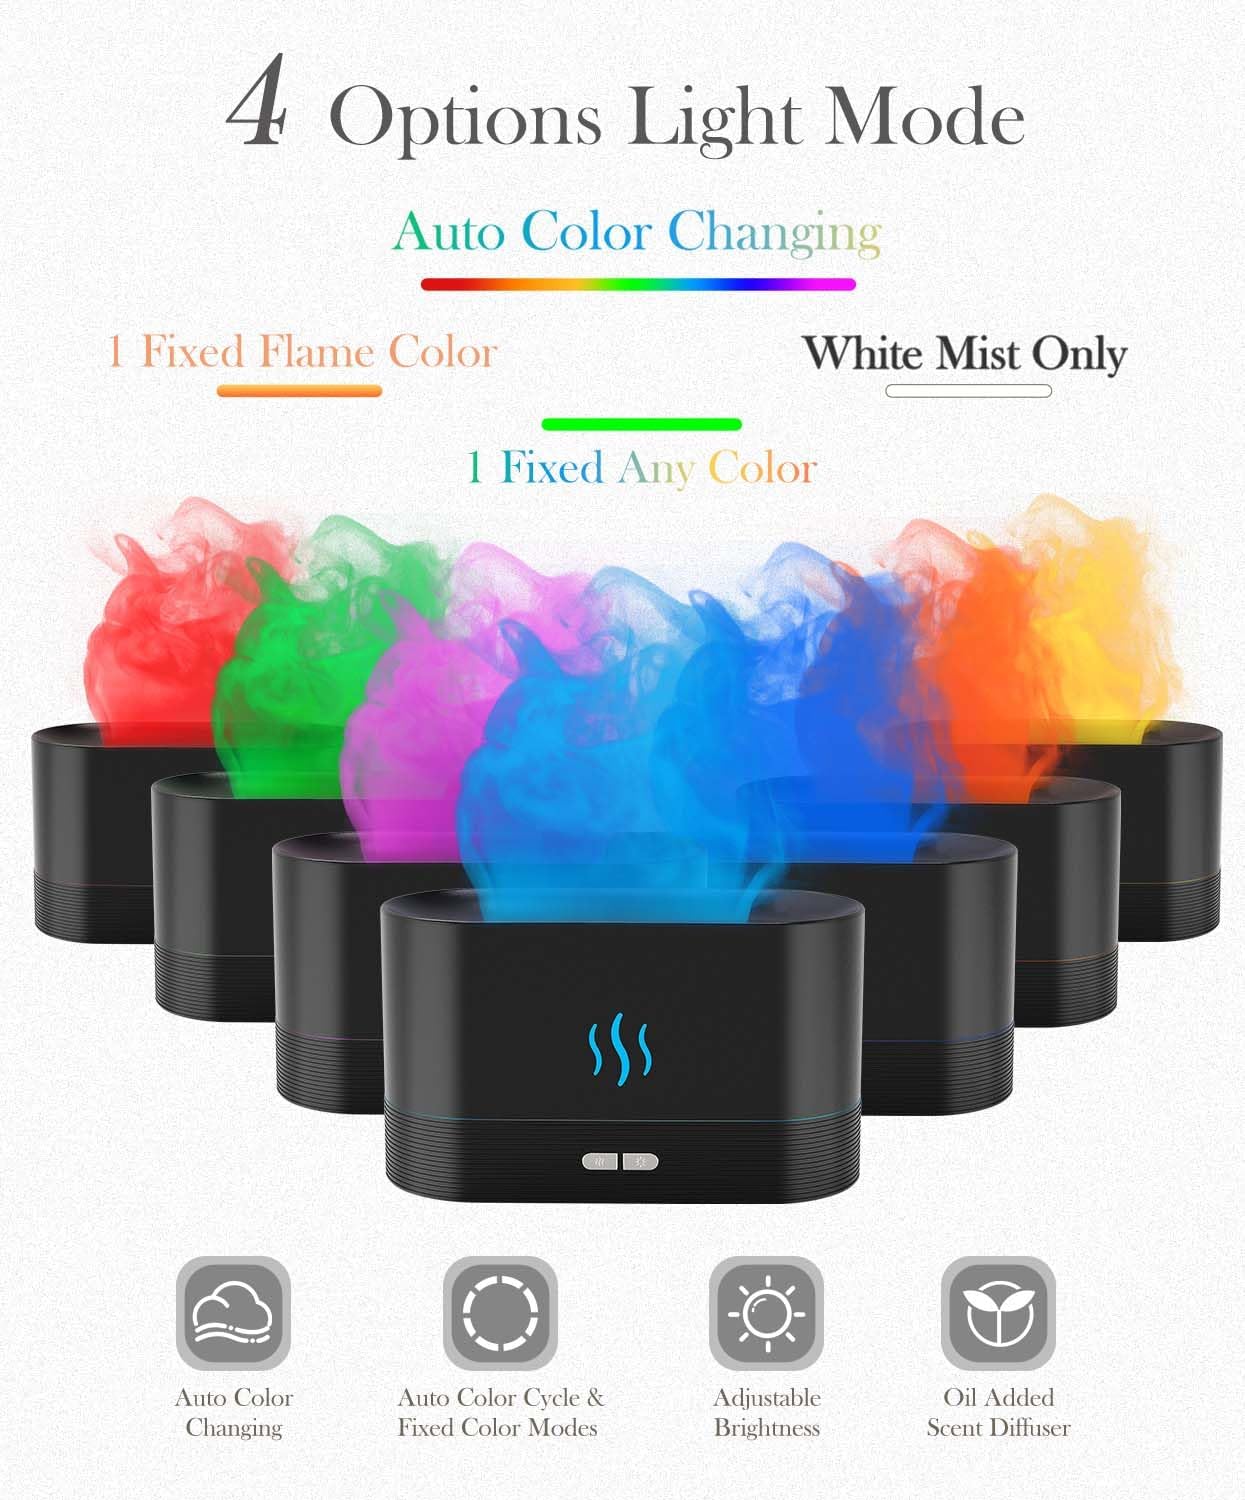 Aegci Flame Mist Humidifier light options